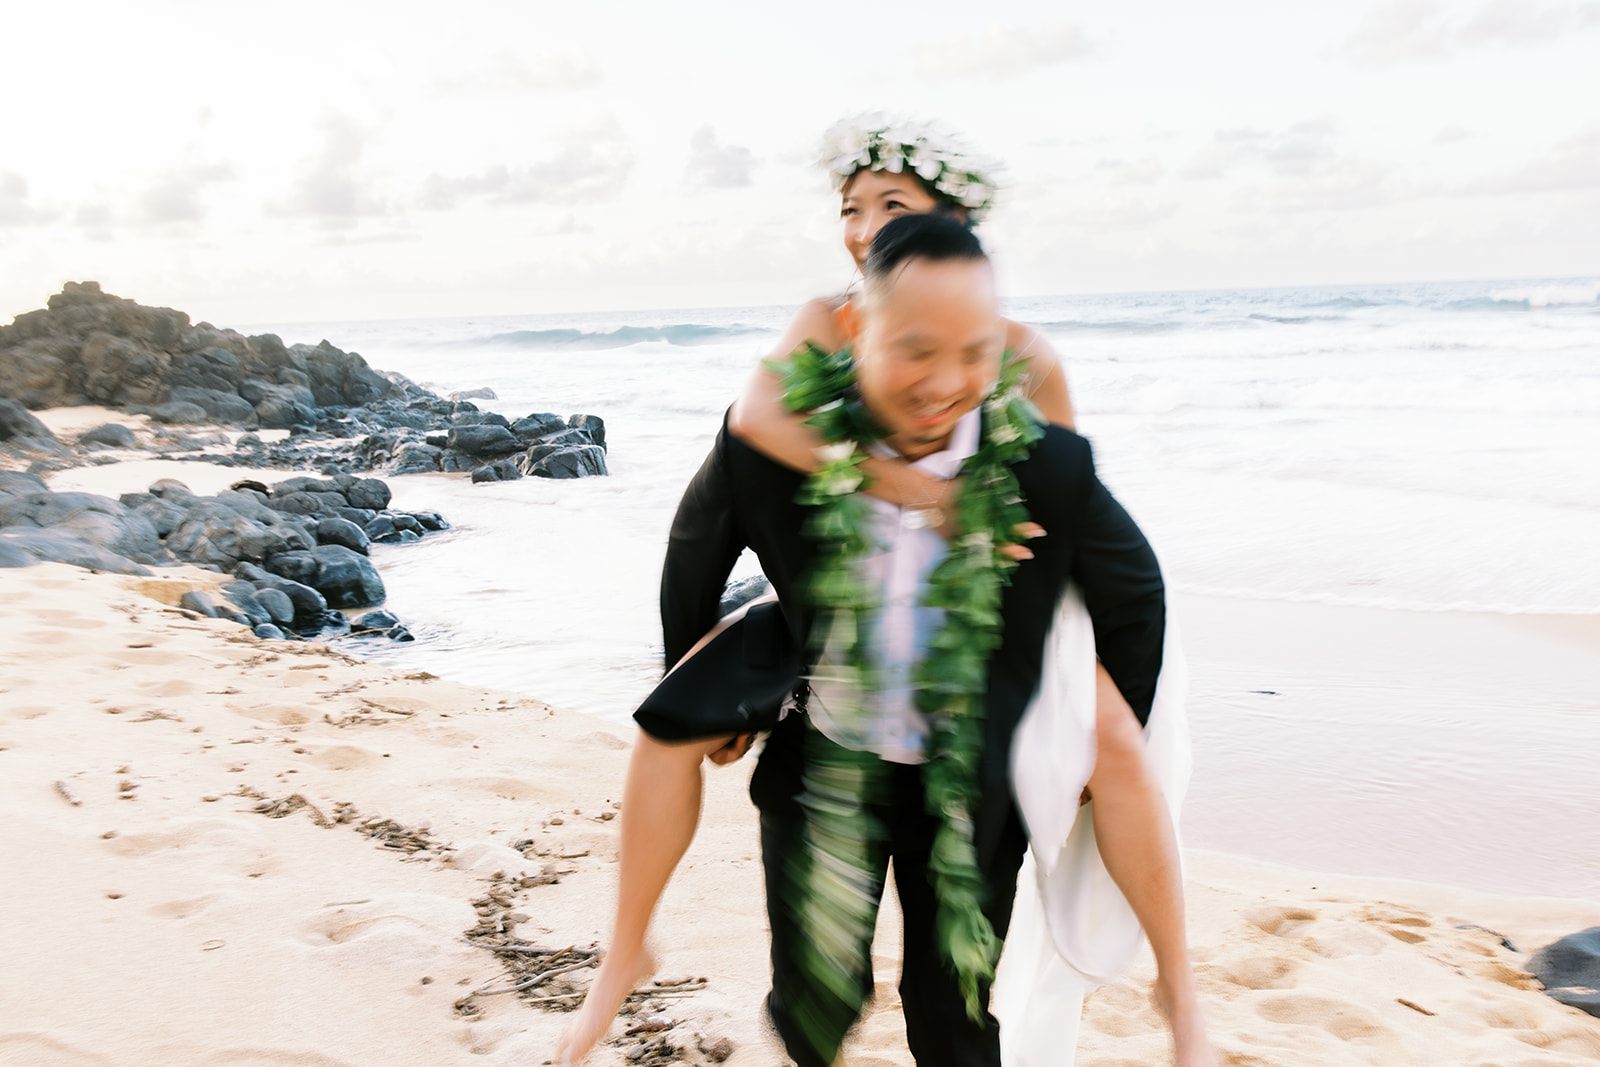 Newlyweds enjoying a playful moment on a beach Wedding at Na ‘Āina Kai captured by Oahu Wedding Photographer